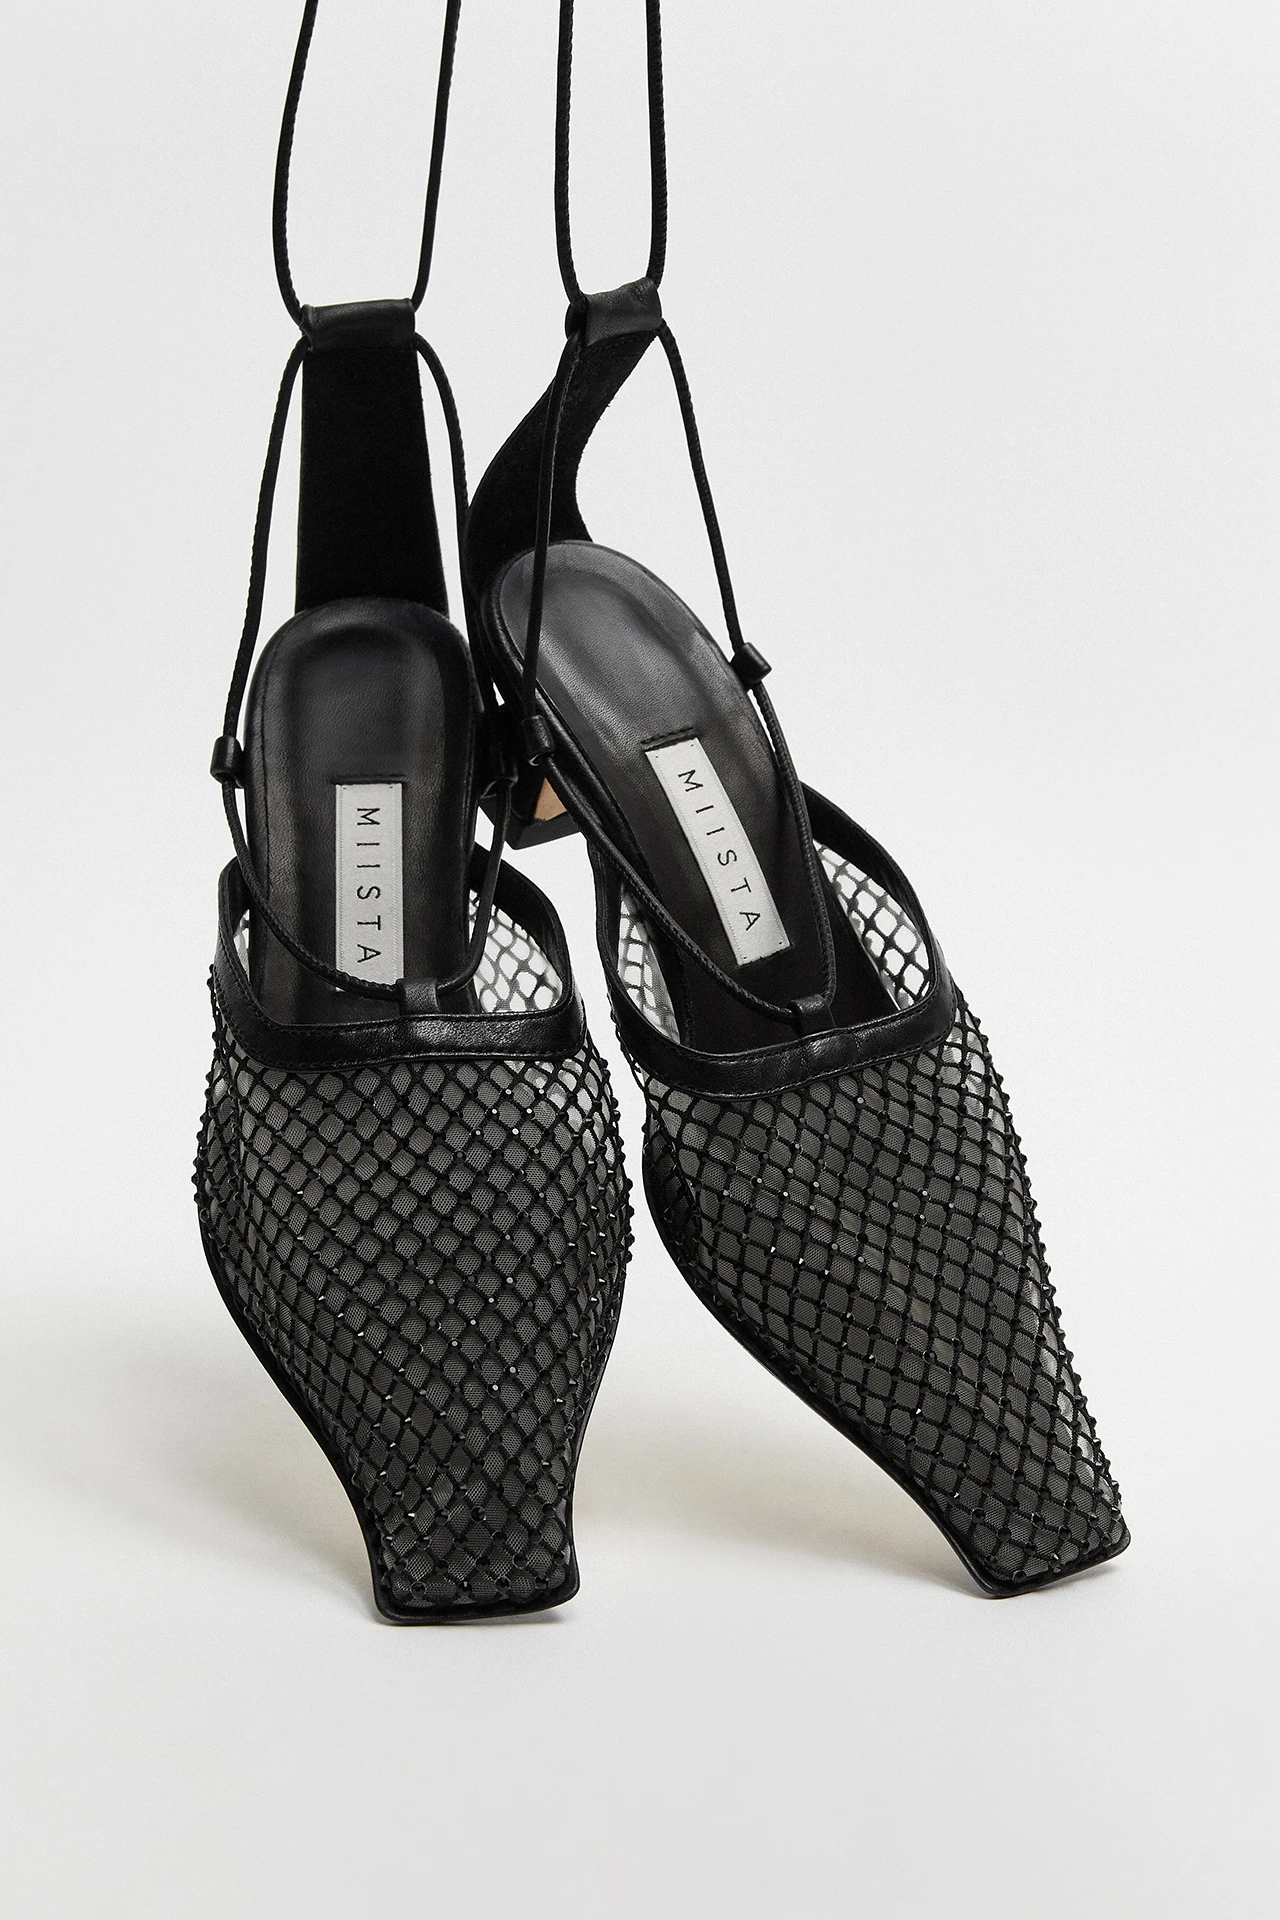 Miista-andes-black-sandals-04